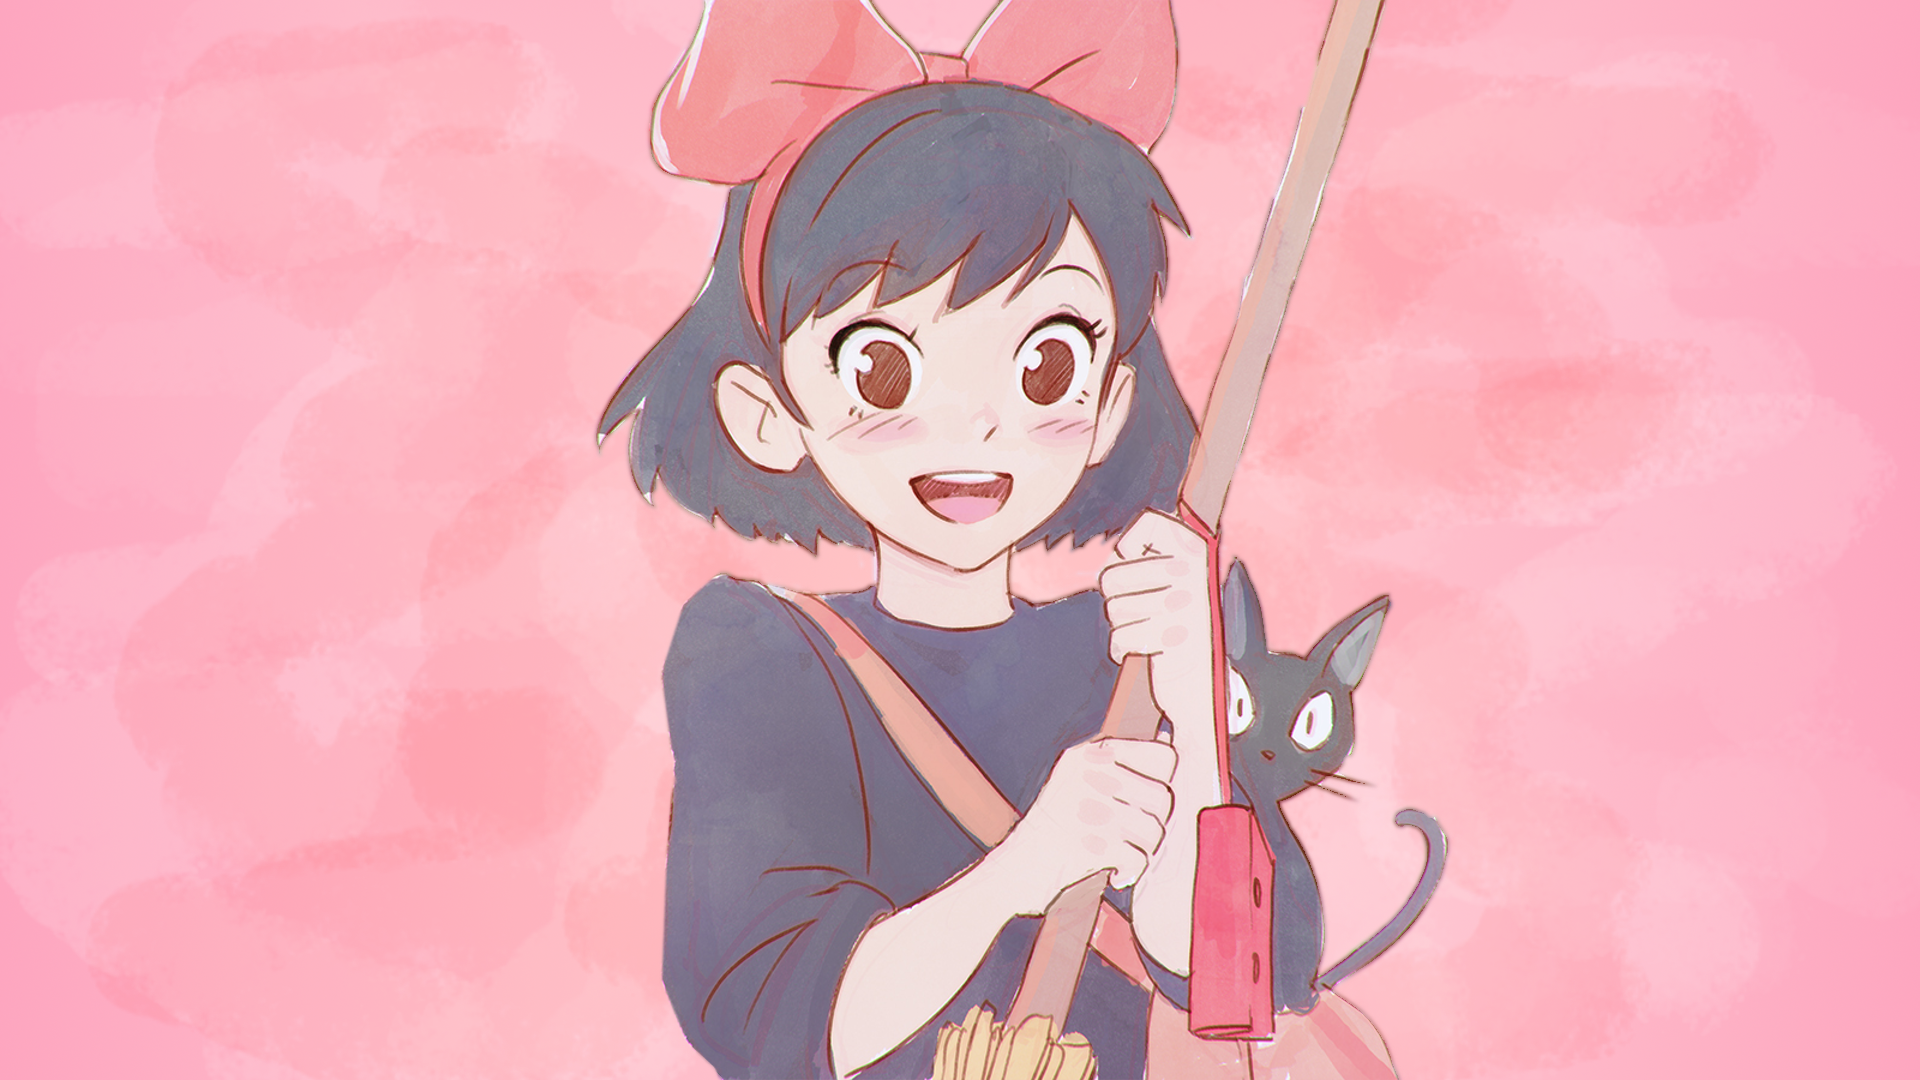 Digital Art Fantasy Art Artwork Original Characters Women Anime Girls Kiki&;s Delivery Service Schoolgirl Witch Cats Anime 1920x1080 UHD Wallpaper. Walldump HD and UHD Wallpaper